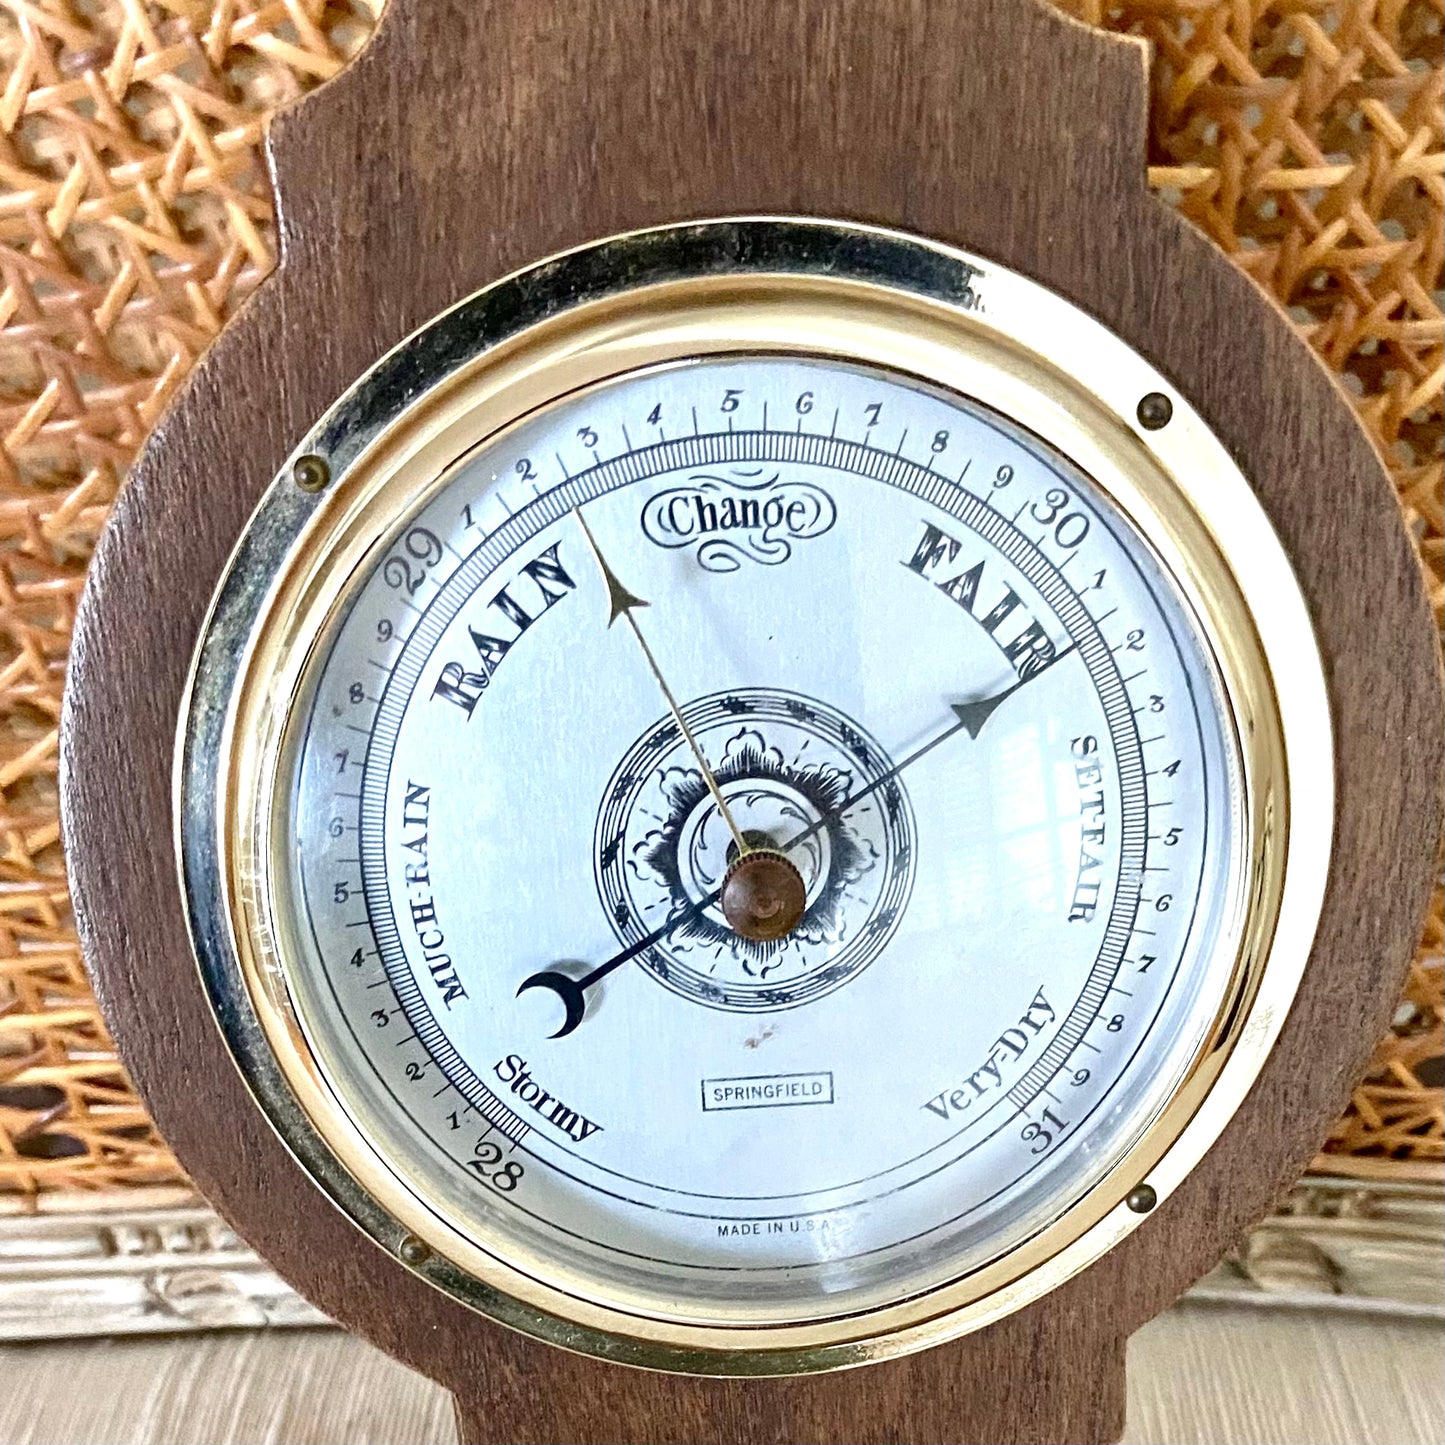 Vintage brass coastal traditional wall barometer